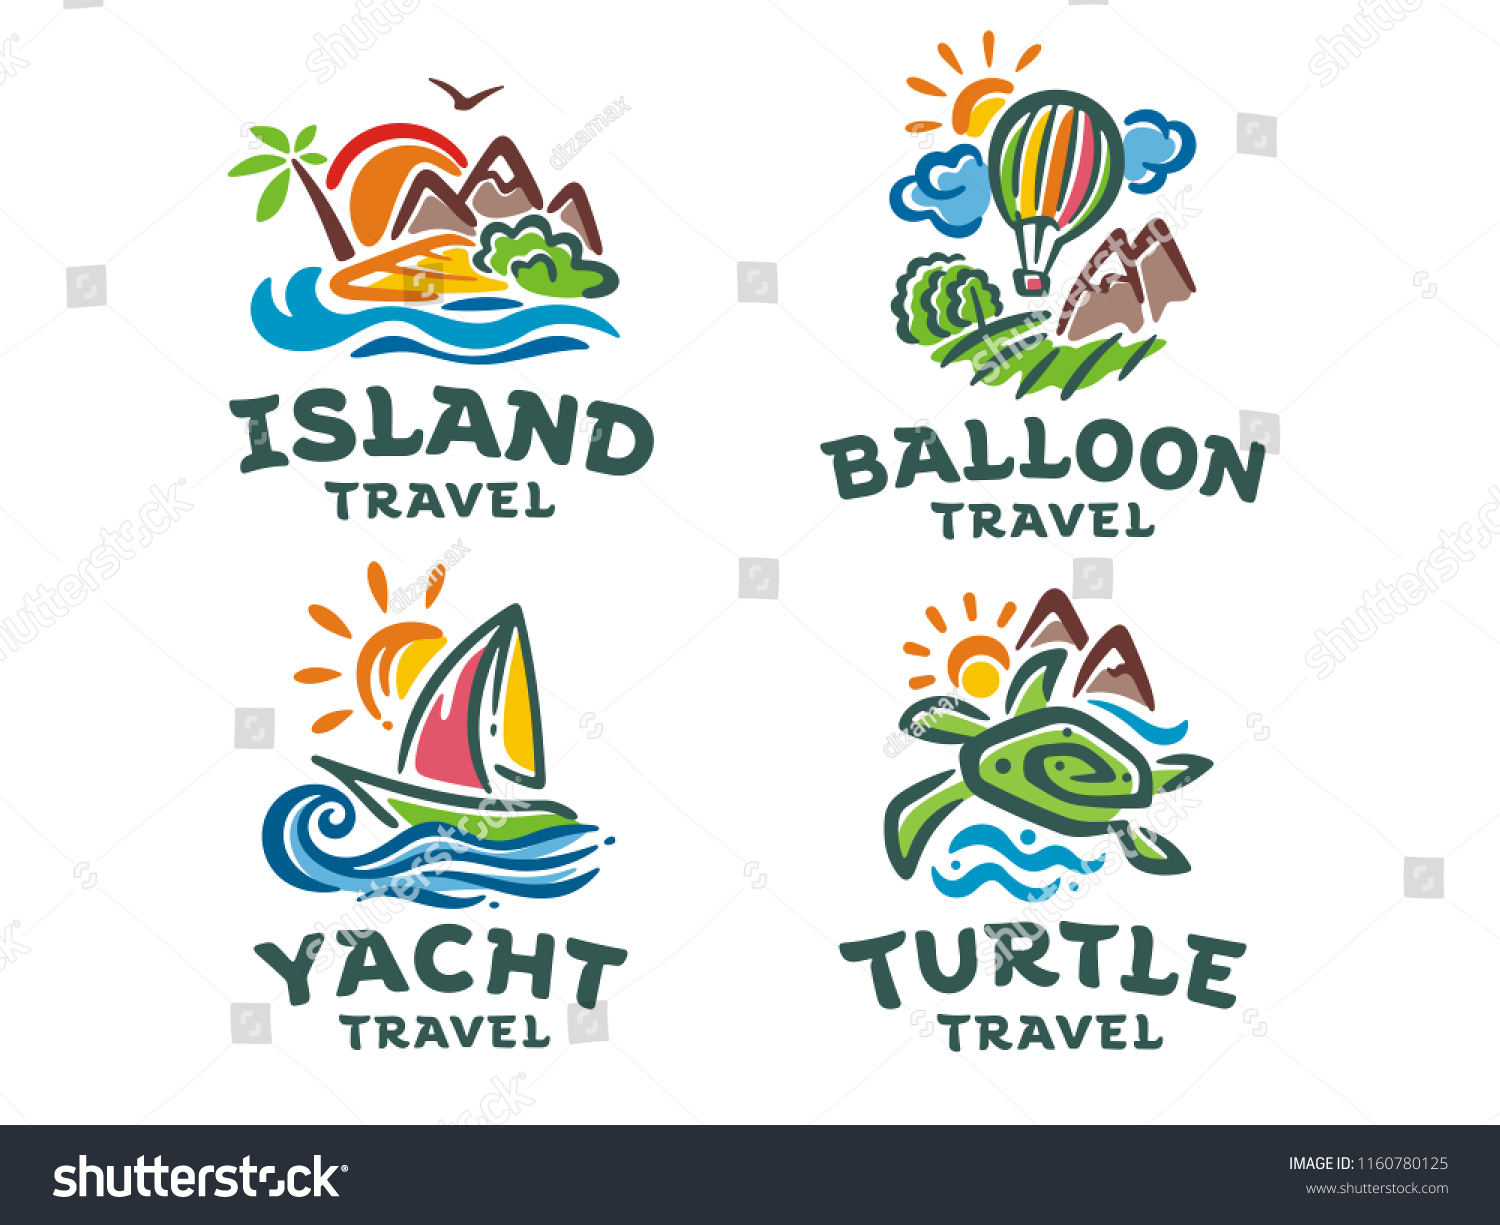 SVG of Vector set of 4 logos. Travel illustration templates. svg